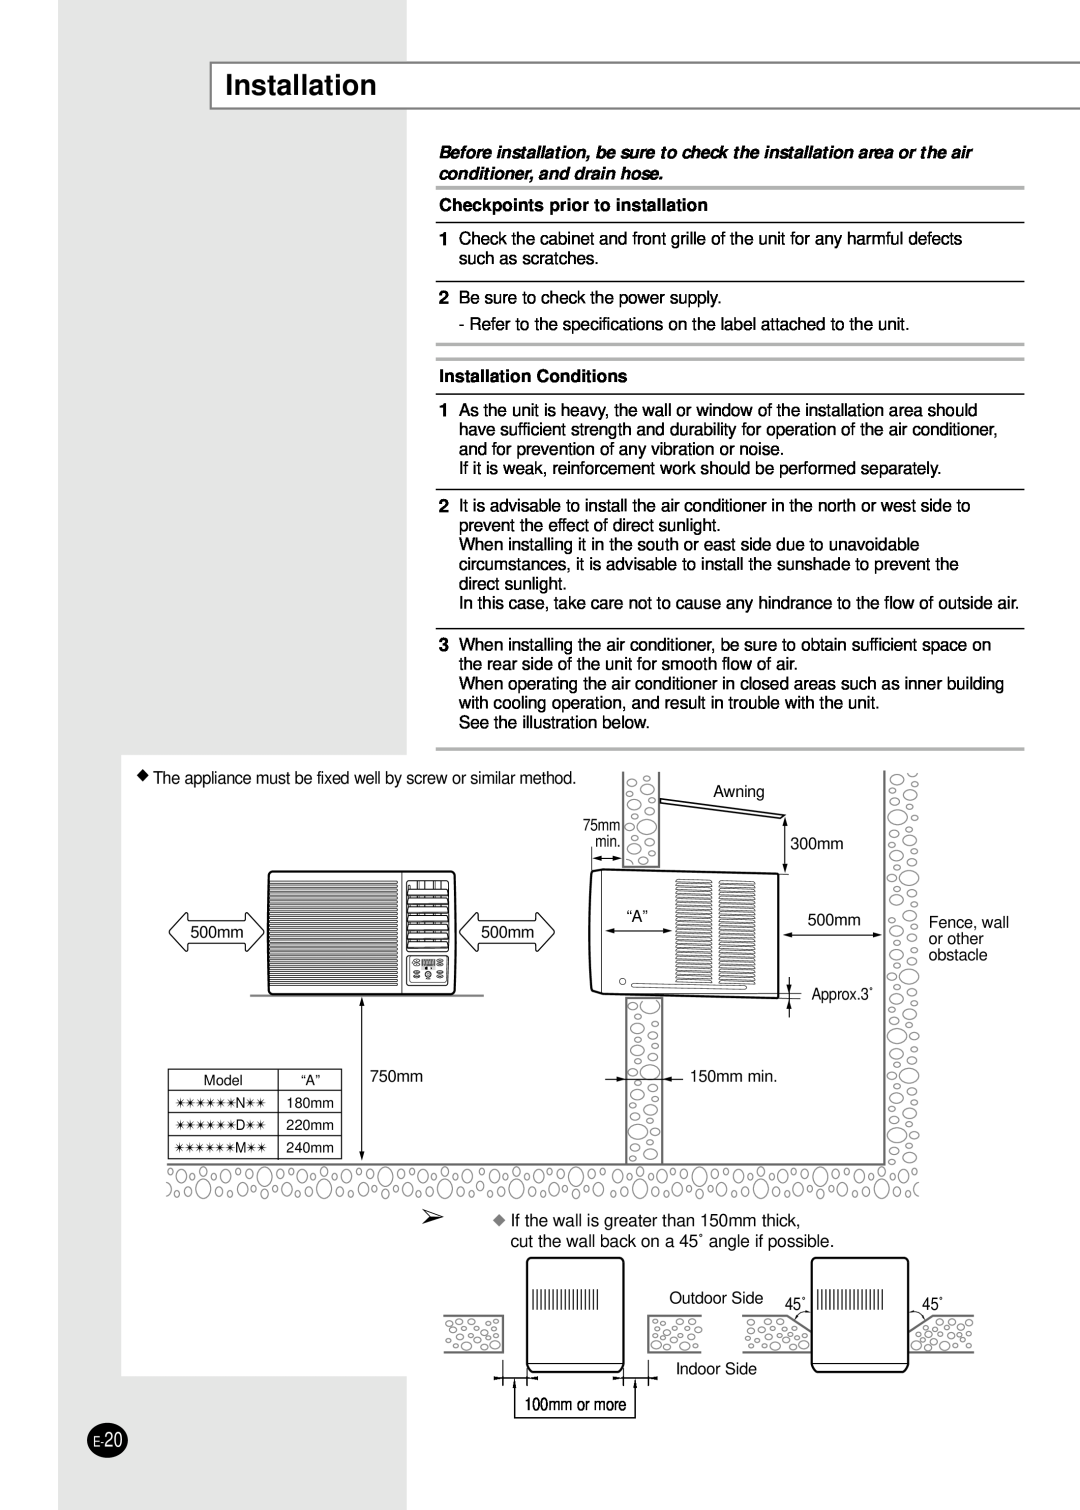 Samsung AW12FADBA manuel dutilisation Checkpoints prior to installation, Installation Conditions 